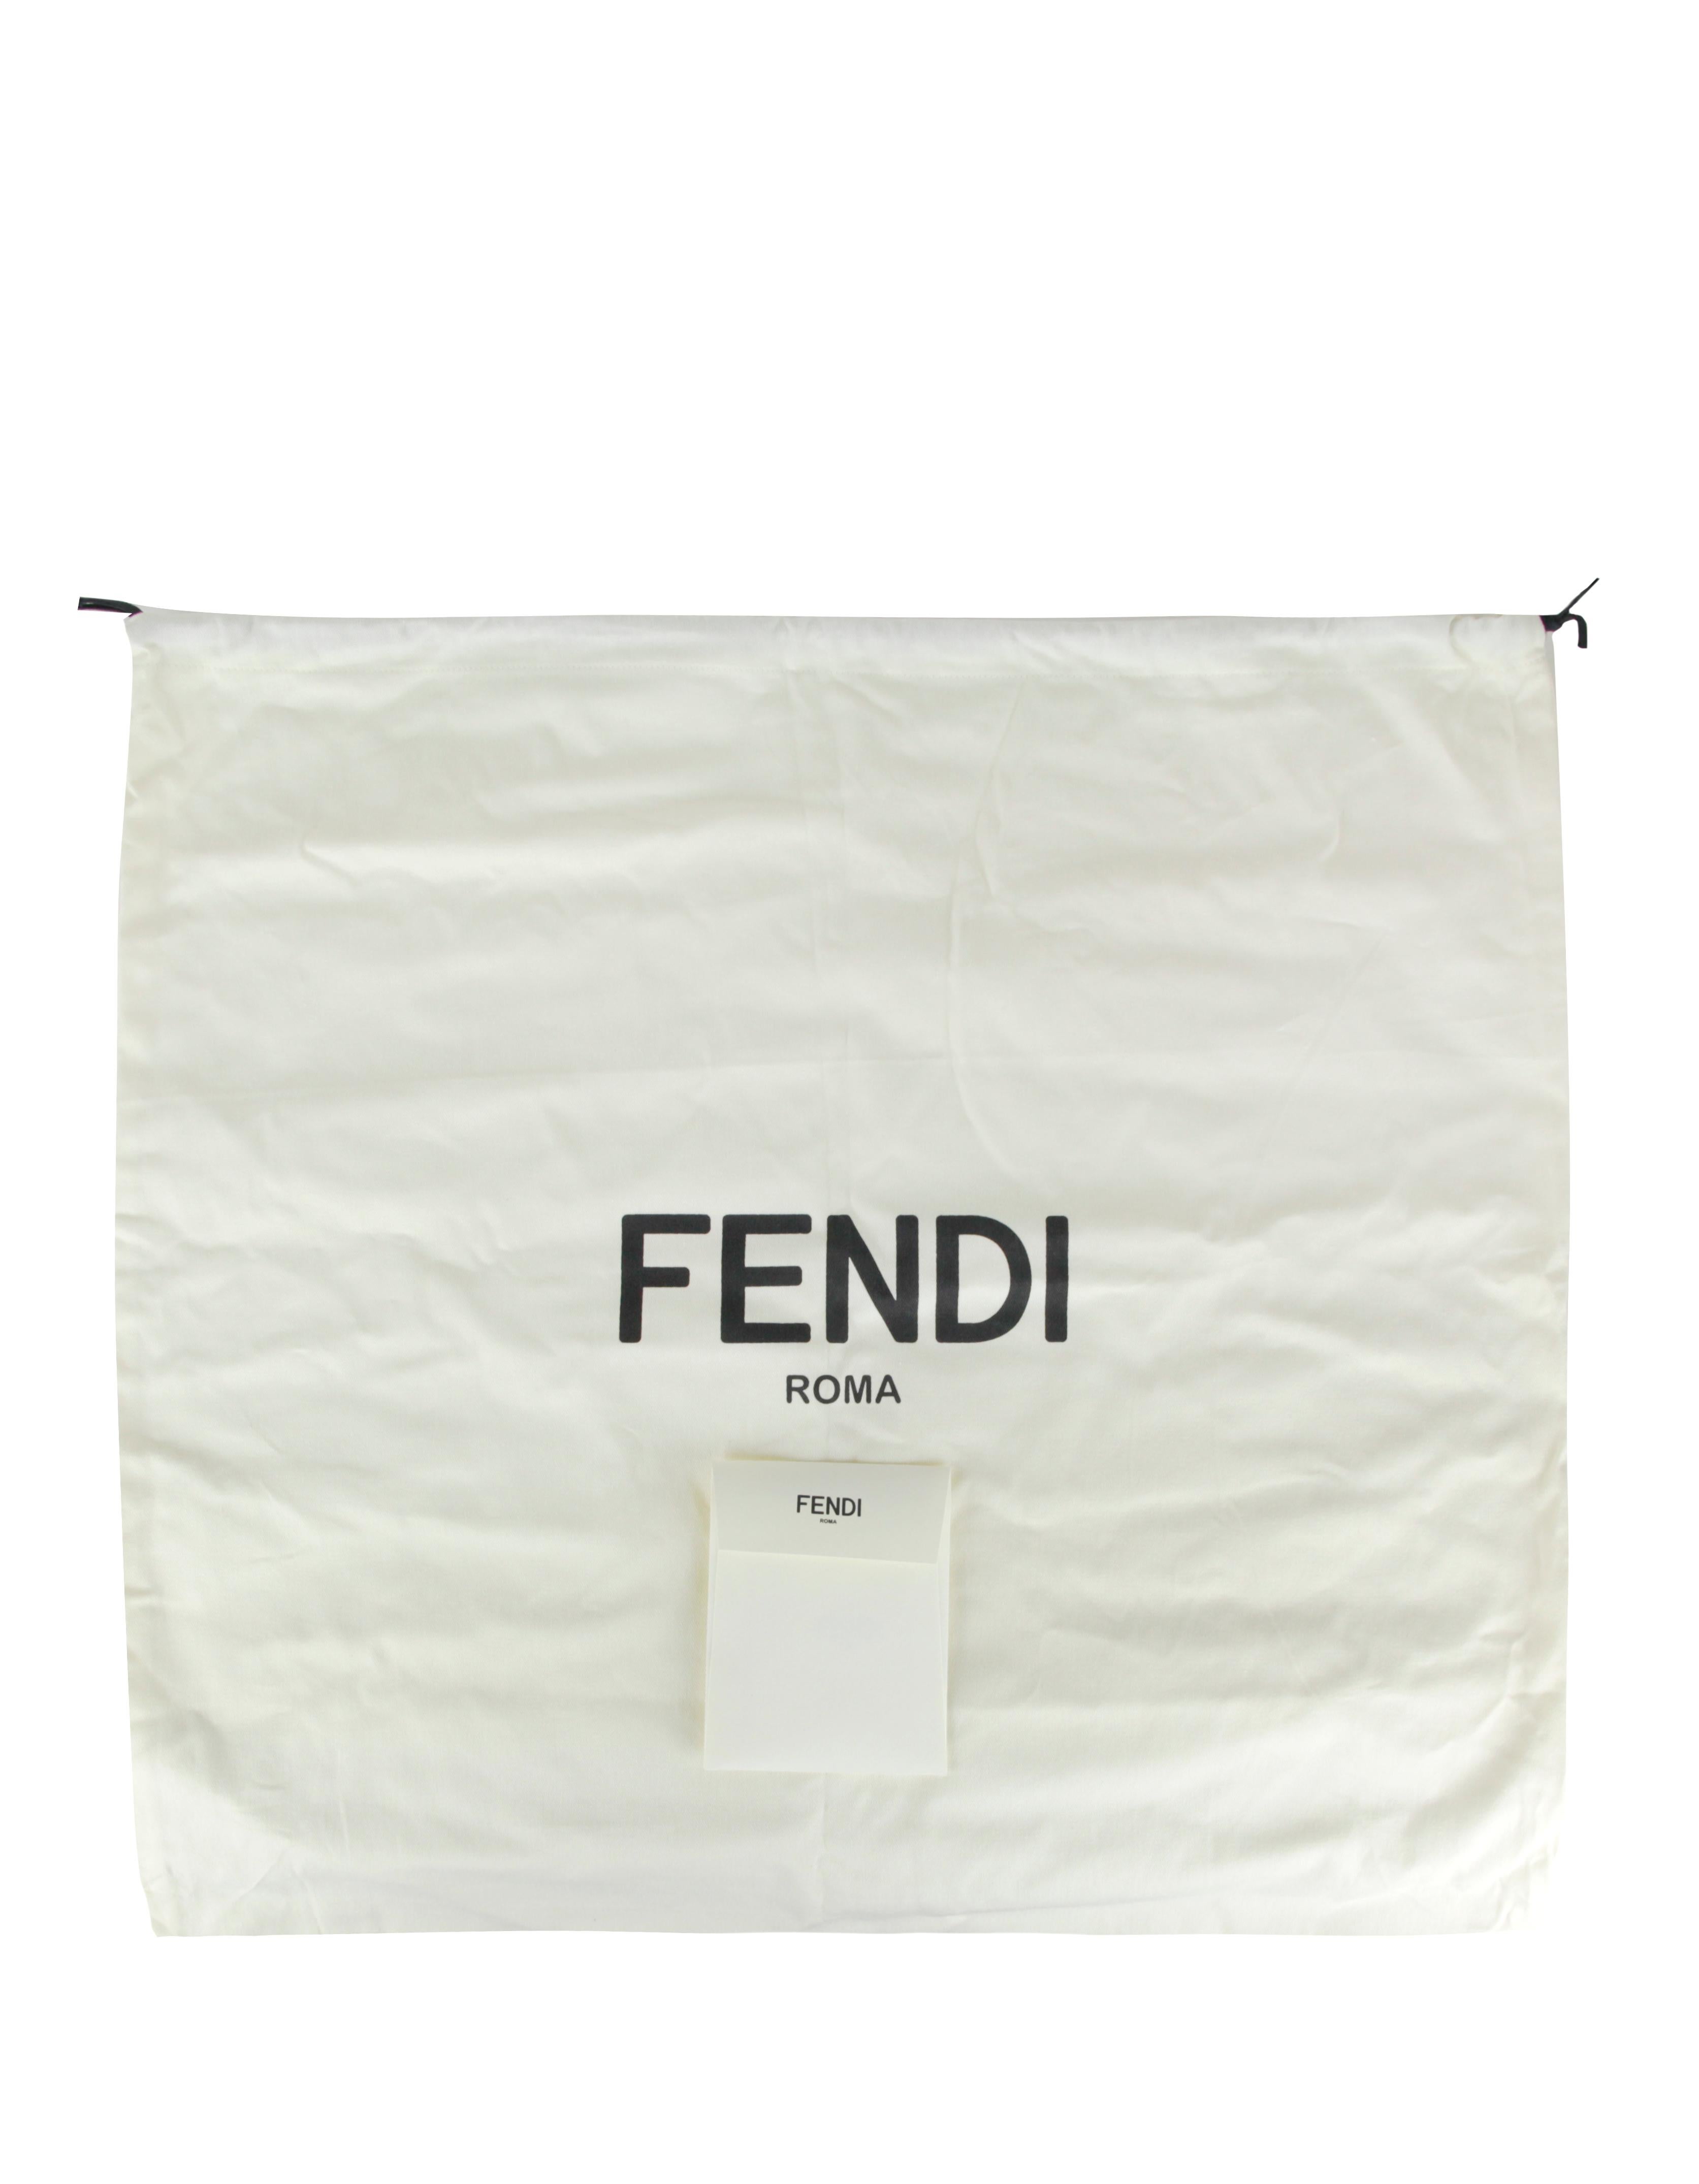 Fendi Mogano Panna Glazed Fabric Monogram FF 1974 Medium Shopper Tote Bag 1